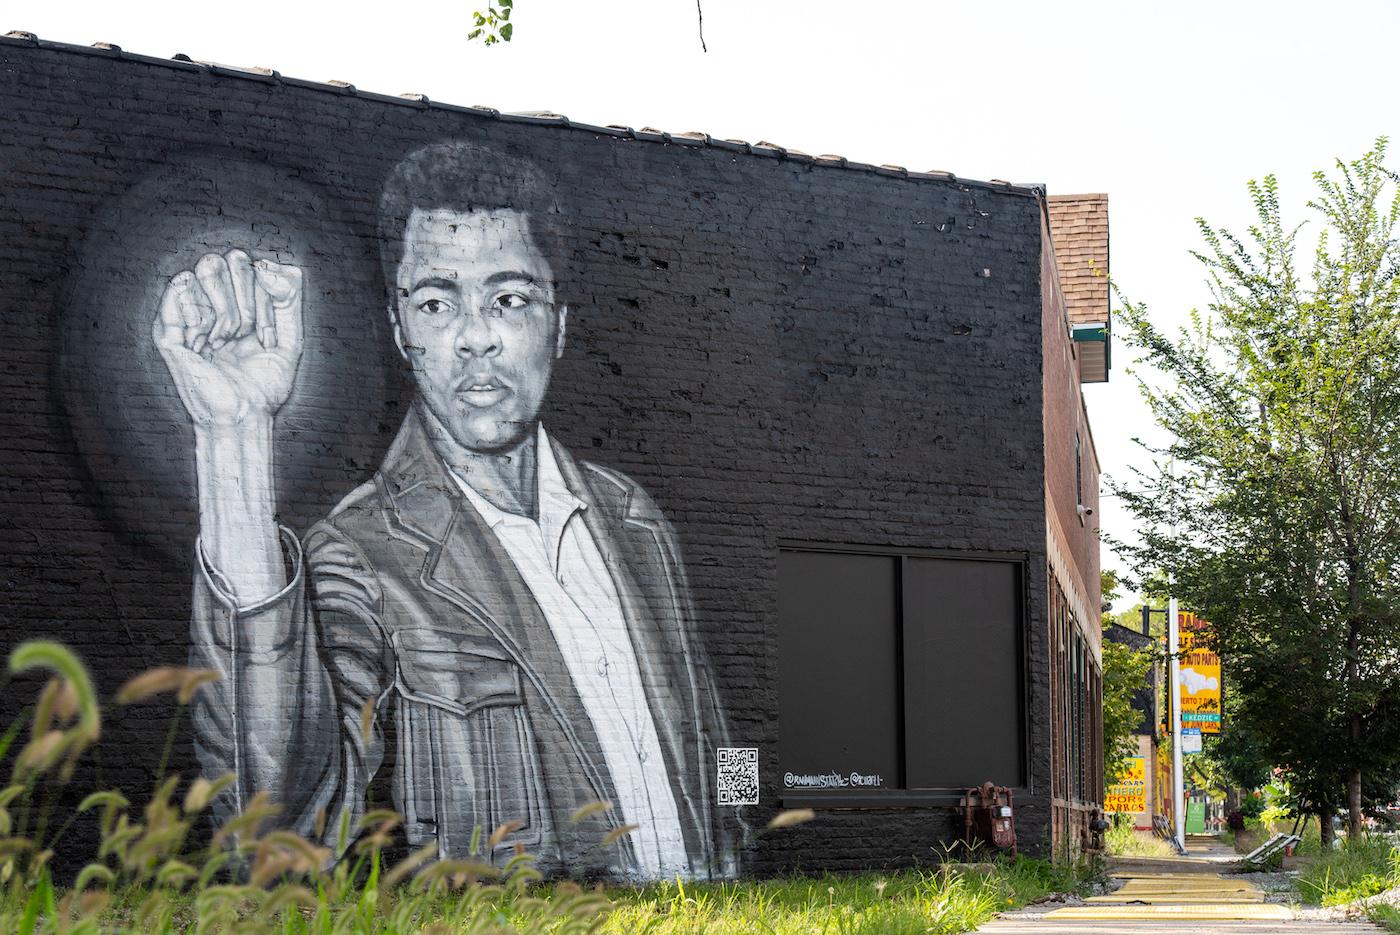 Rahmaan Statik's Muhammad Ali mural in Chicago's Little Village. Photo: WTTW/Liz Markel